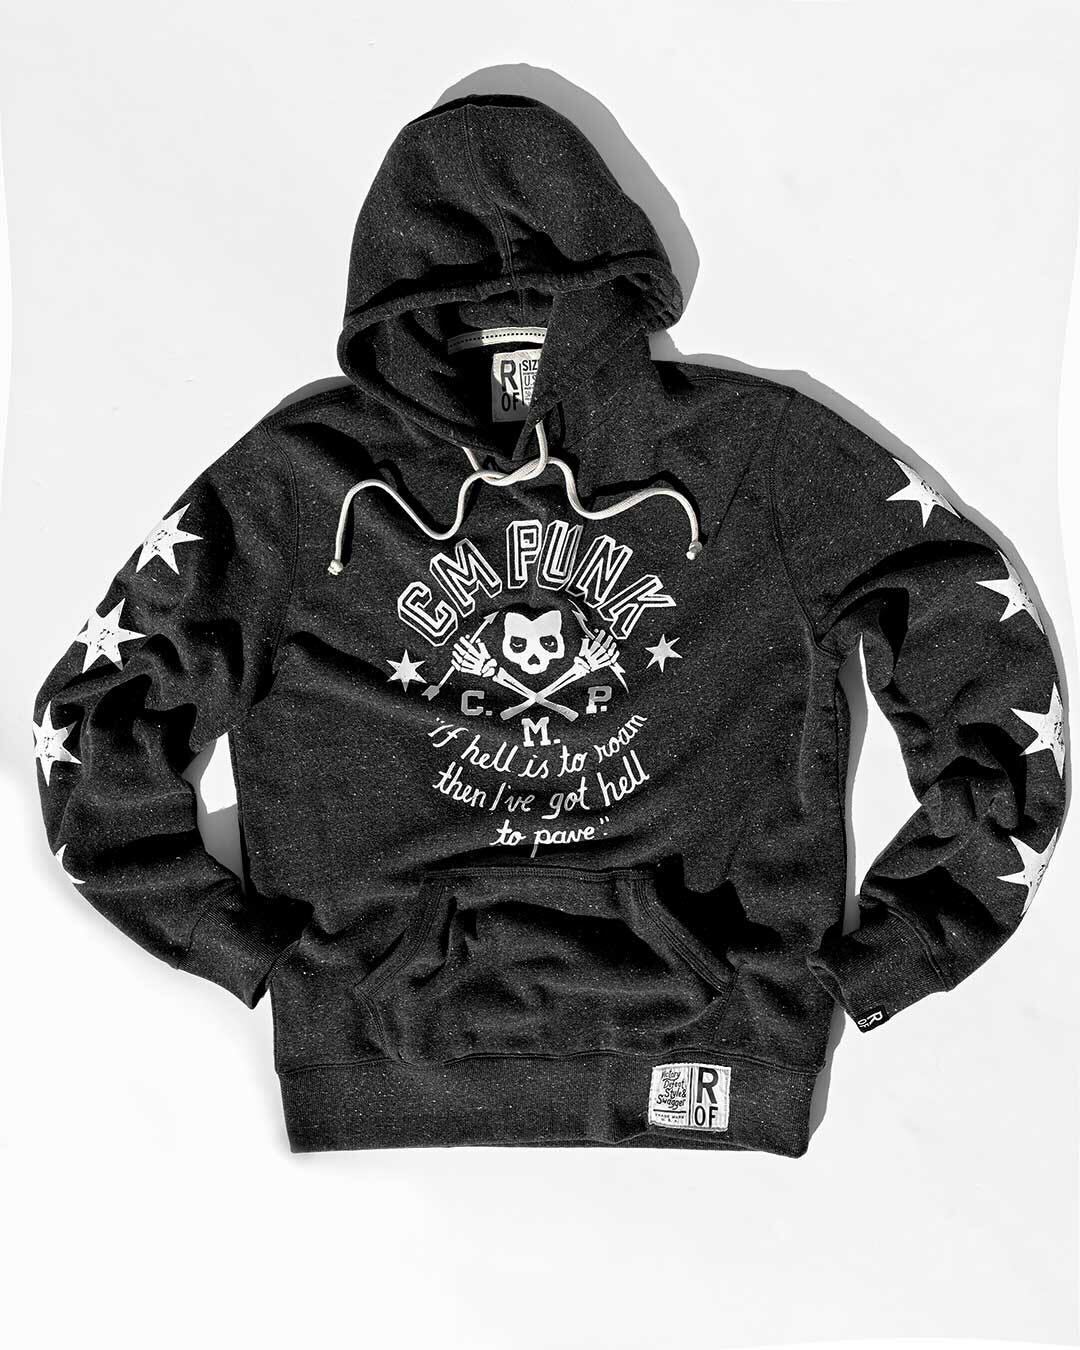 CM Punk Black PO Hoody - Roots of Fight hoodie